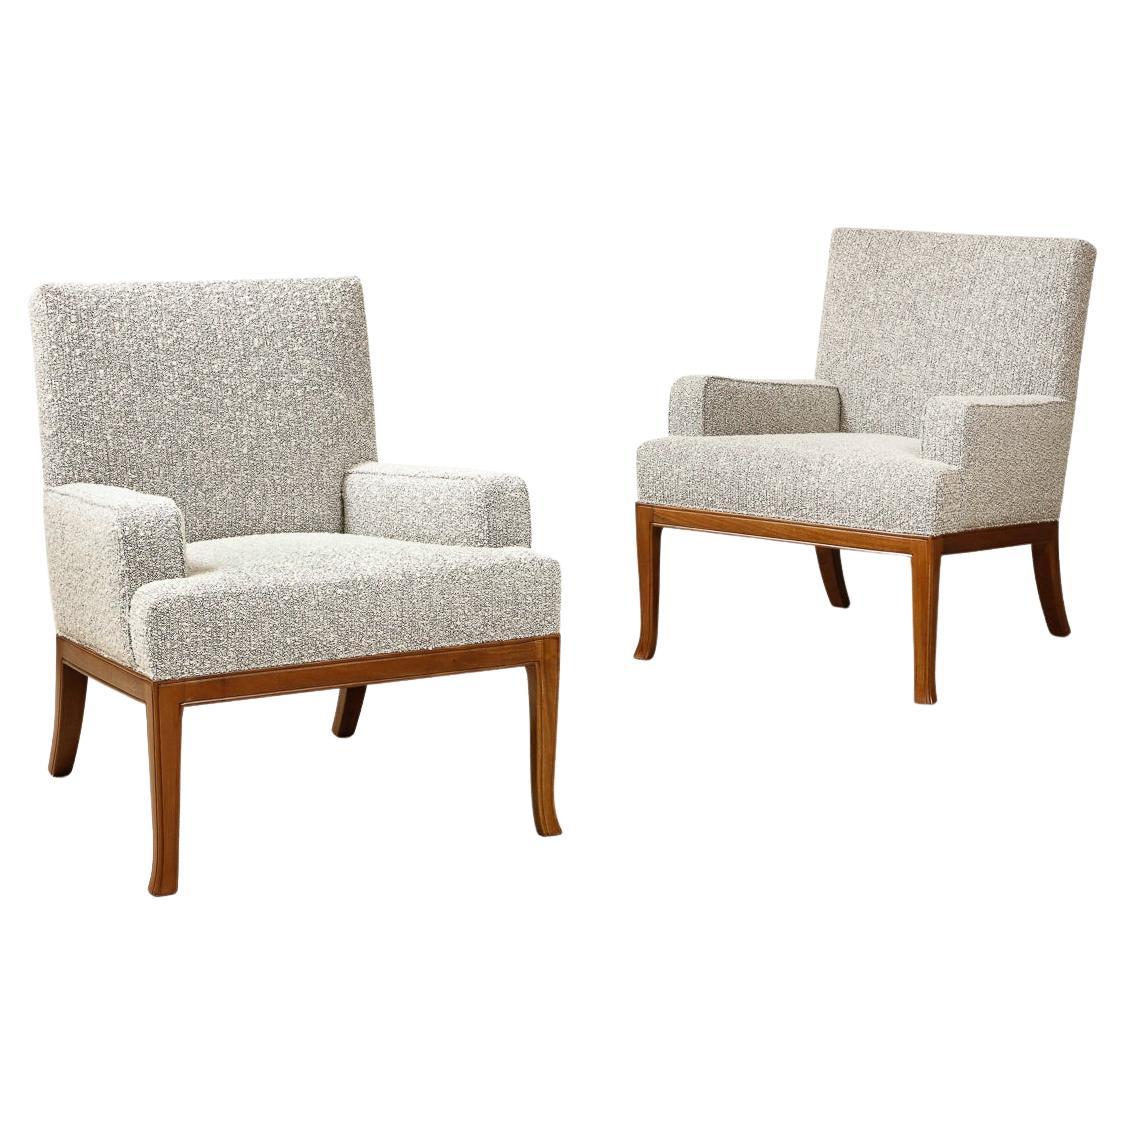 T. H. Robsjohn-Gibbings Lounge Chairs For Sale